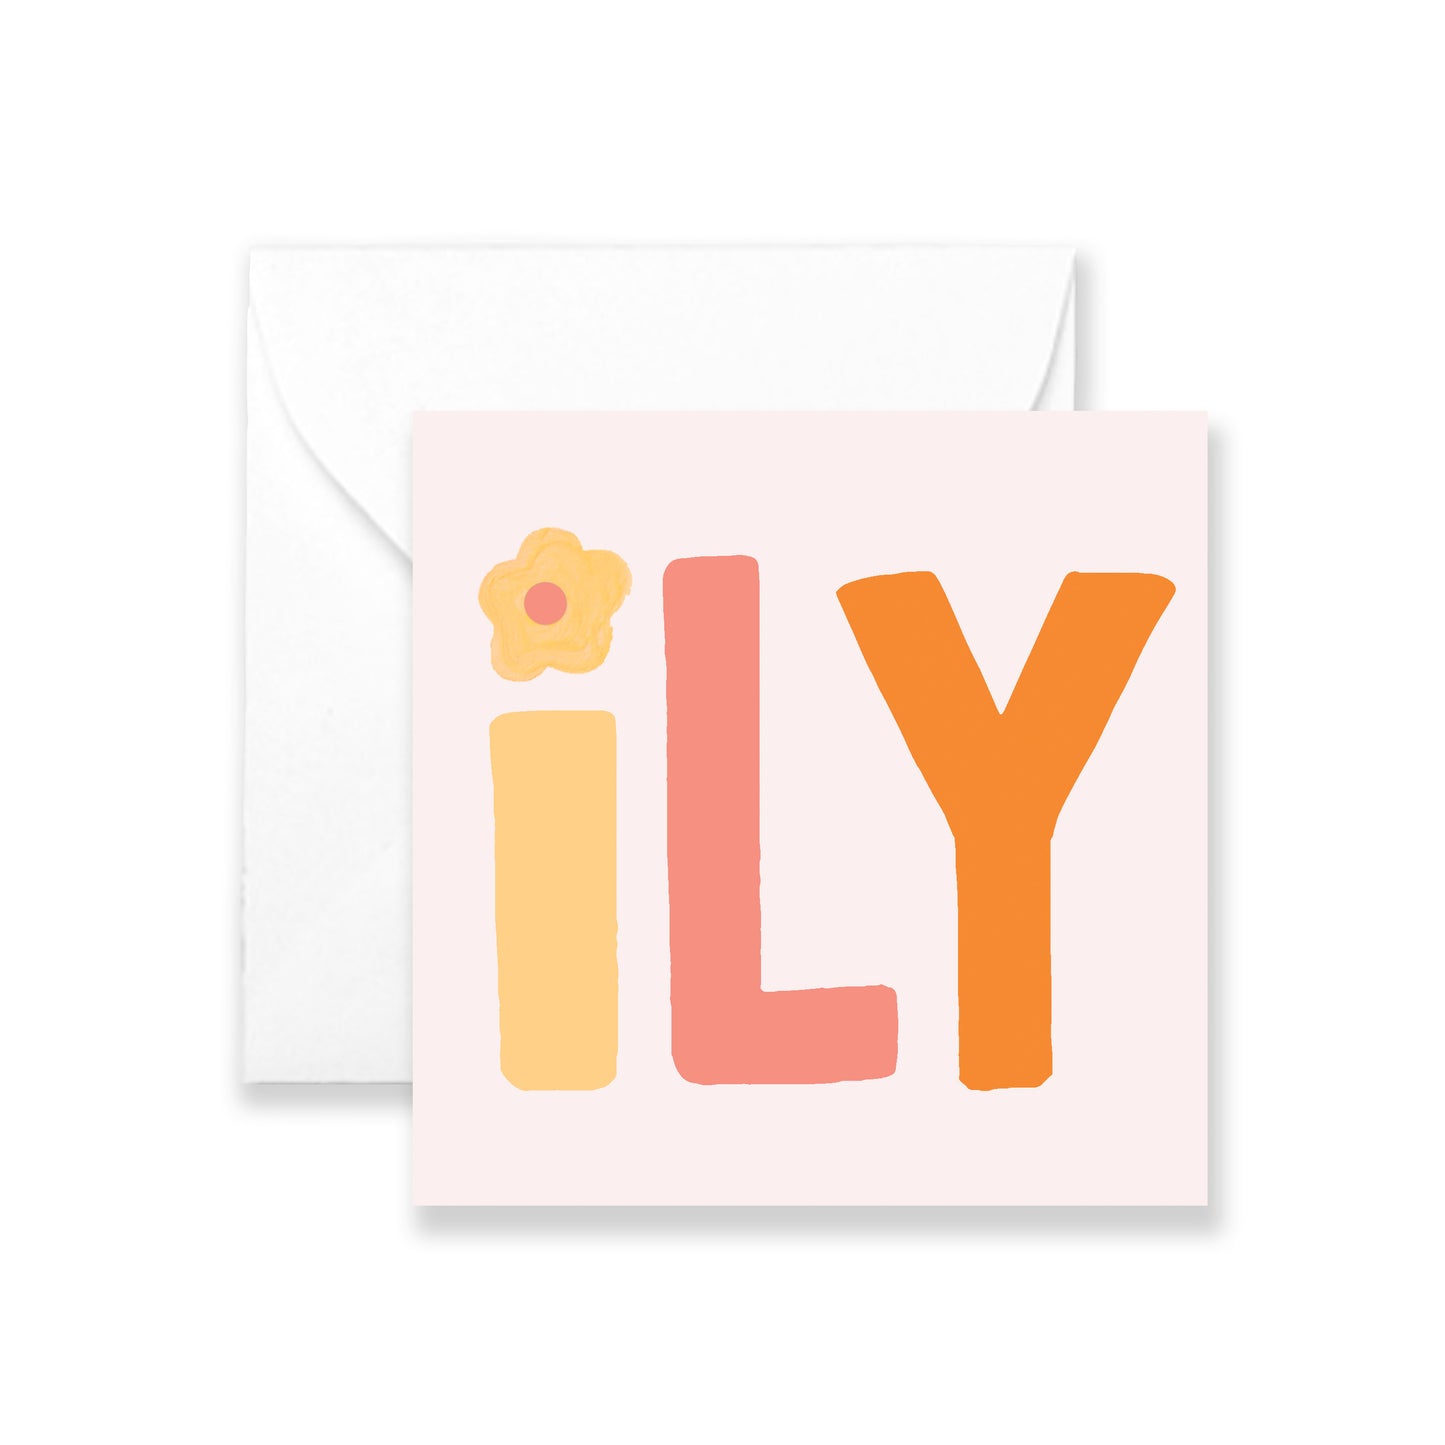 ILY - Izzy Mini Greeting Card